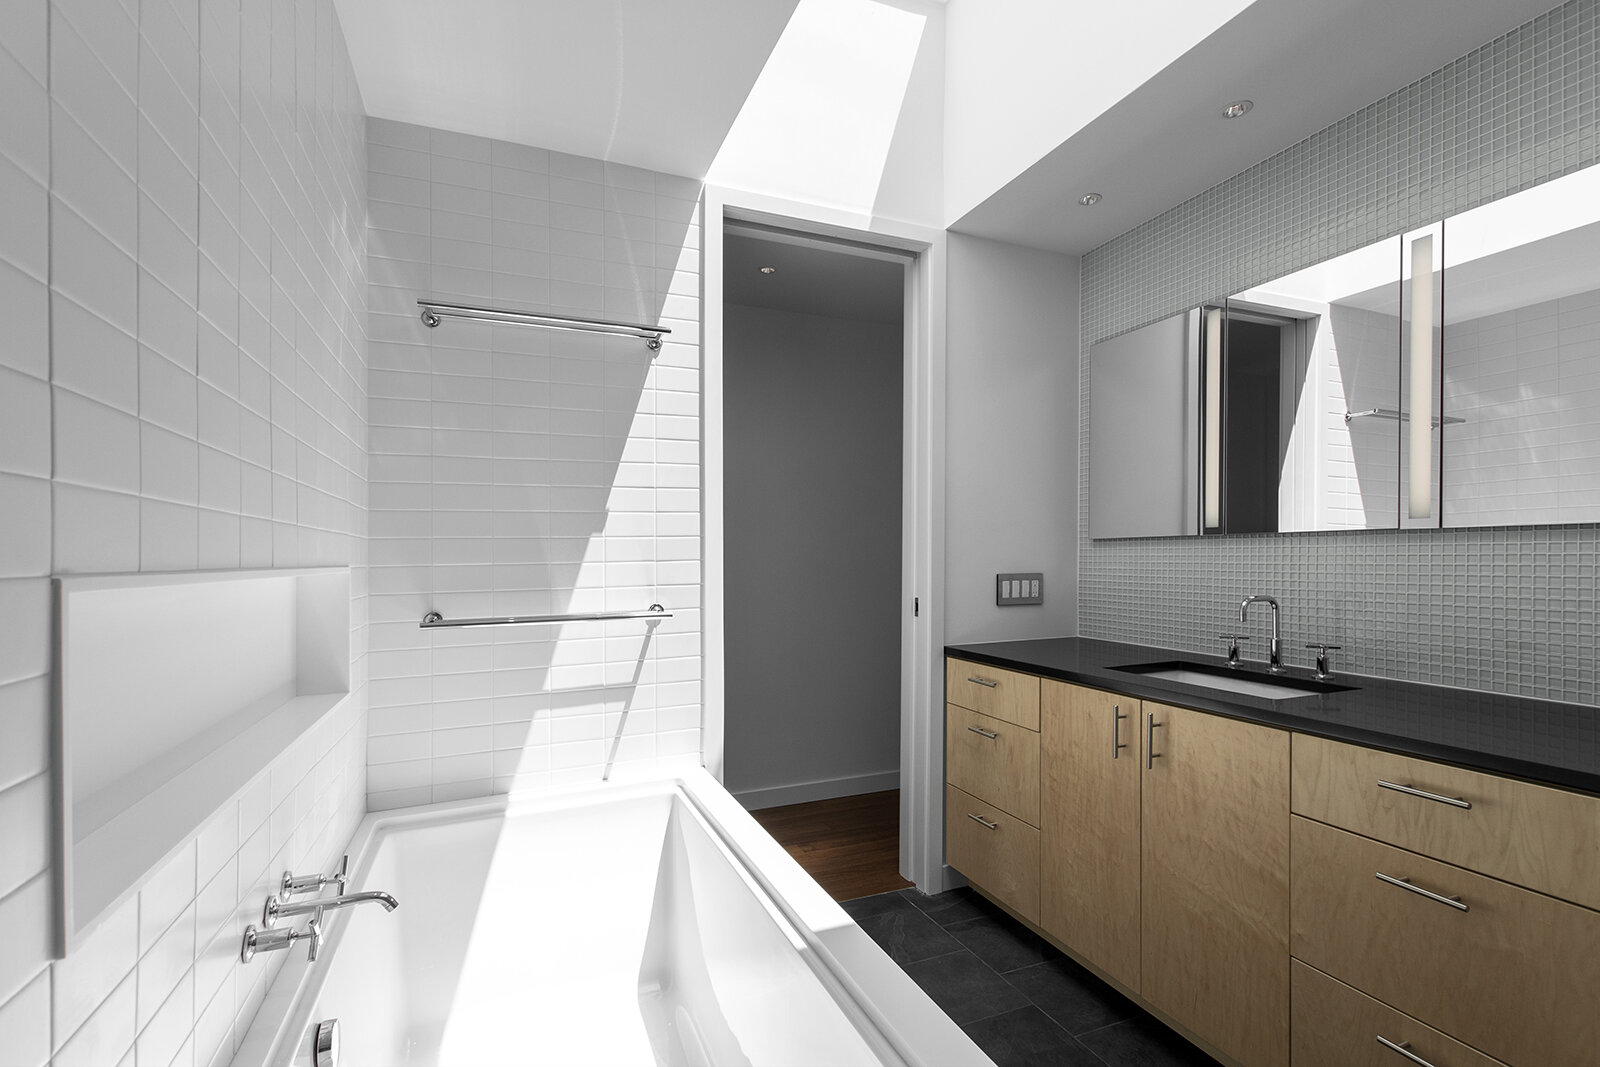 18-res4-re4a-resolution-4-architecture-modern-modular-prefab-sharon residence-interior-master-bathroom-tub.jpg